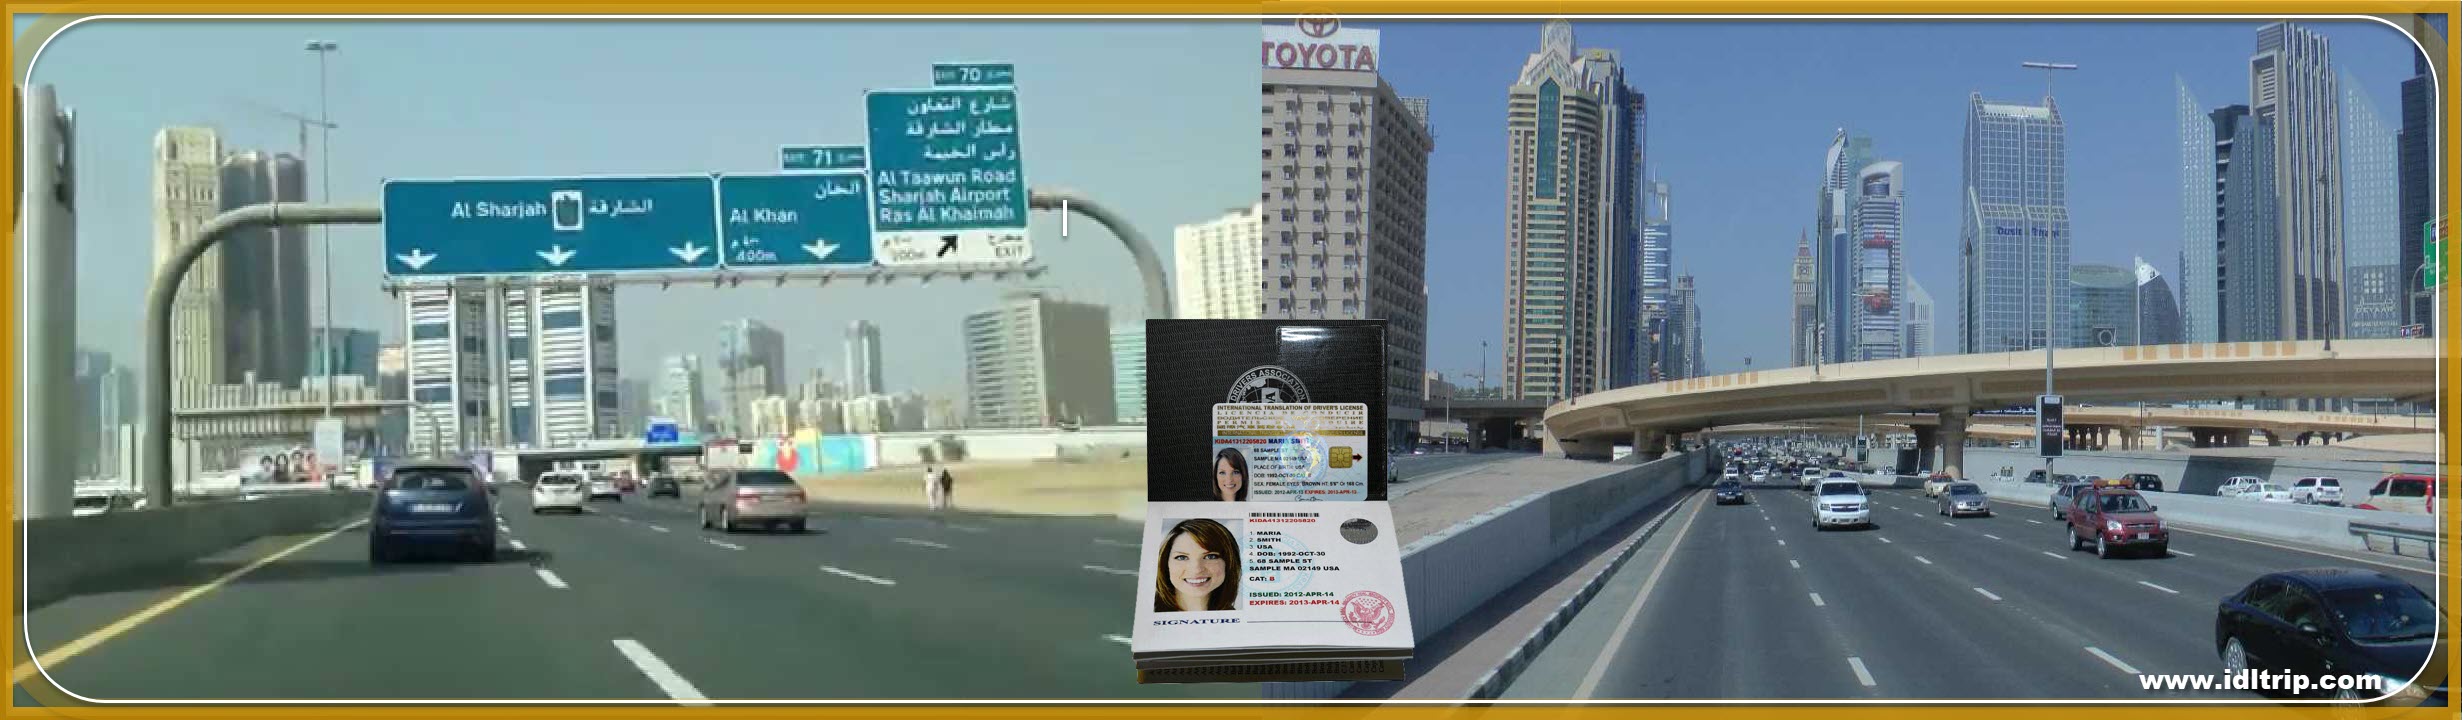 Driving on UAE roads